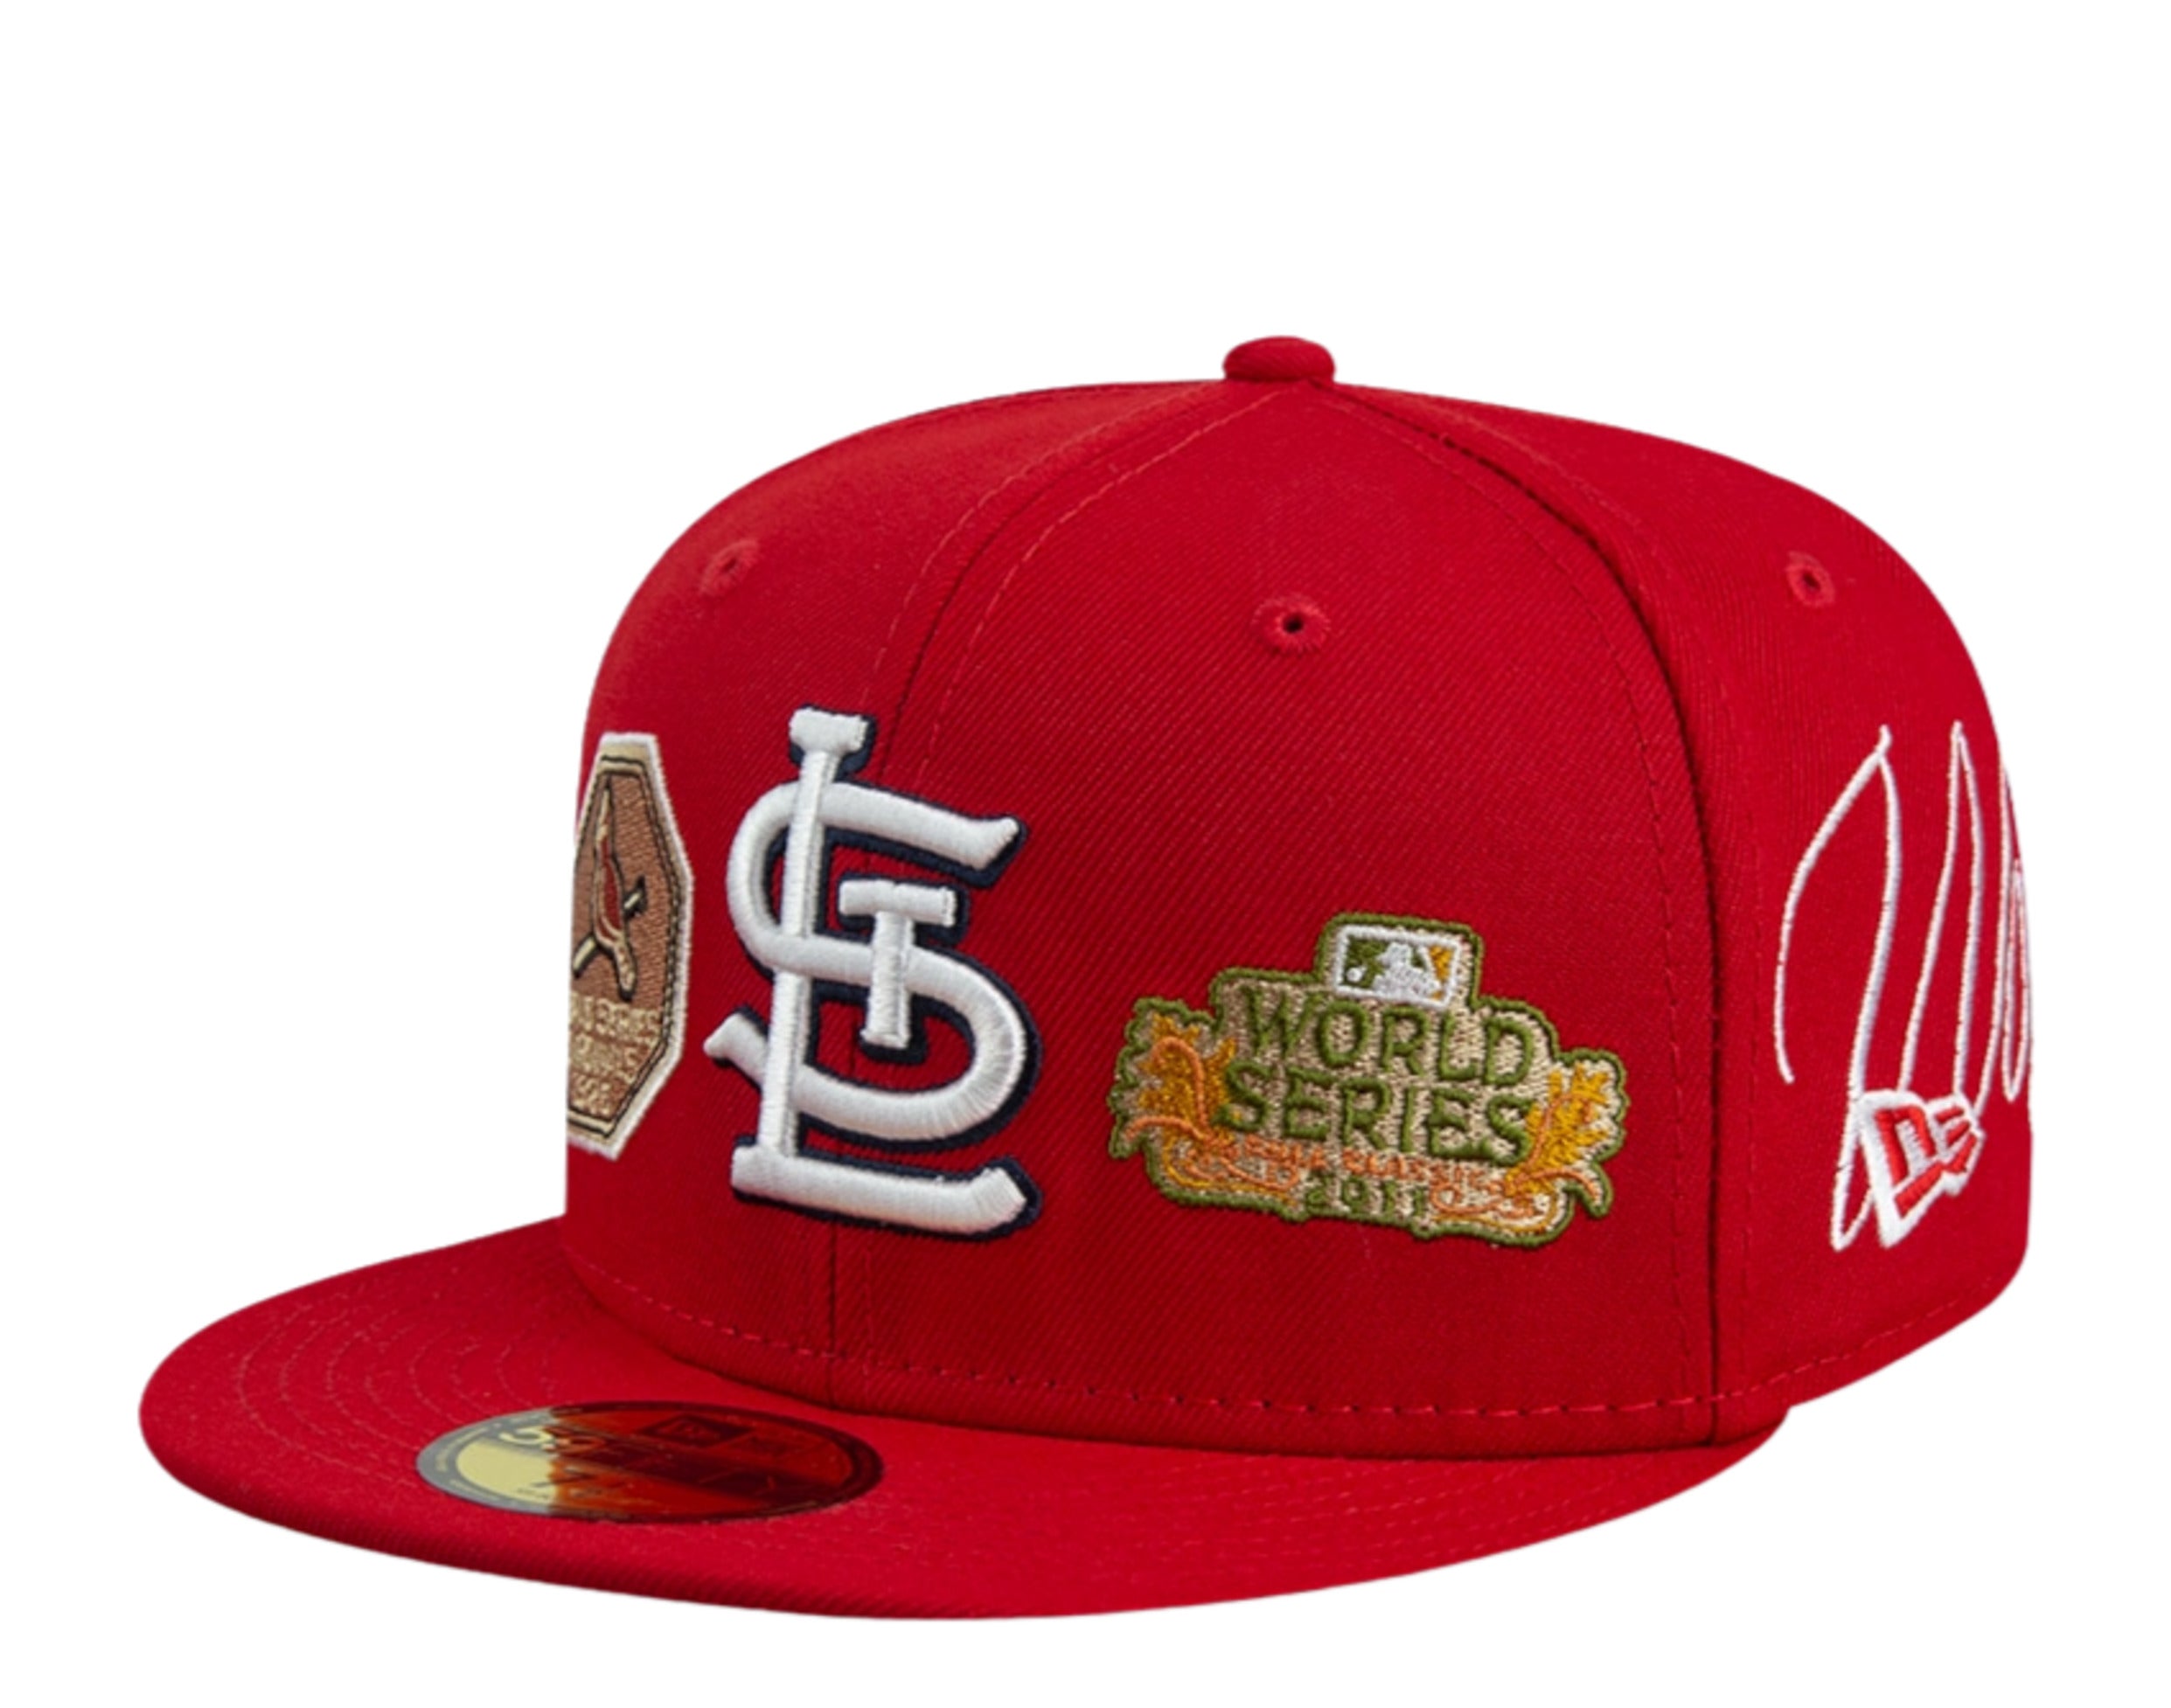 New Era x Politics St. Louis Cardinals 59FIFTY Fitted Hat - Light Bronze/Lemon, Size 7 5/8 by Sneaker Politics